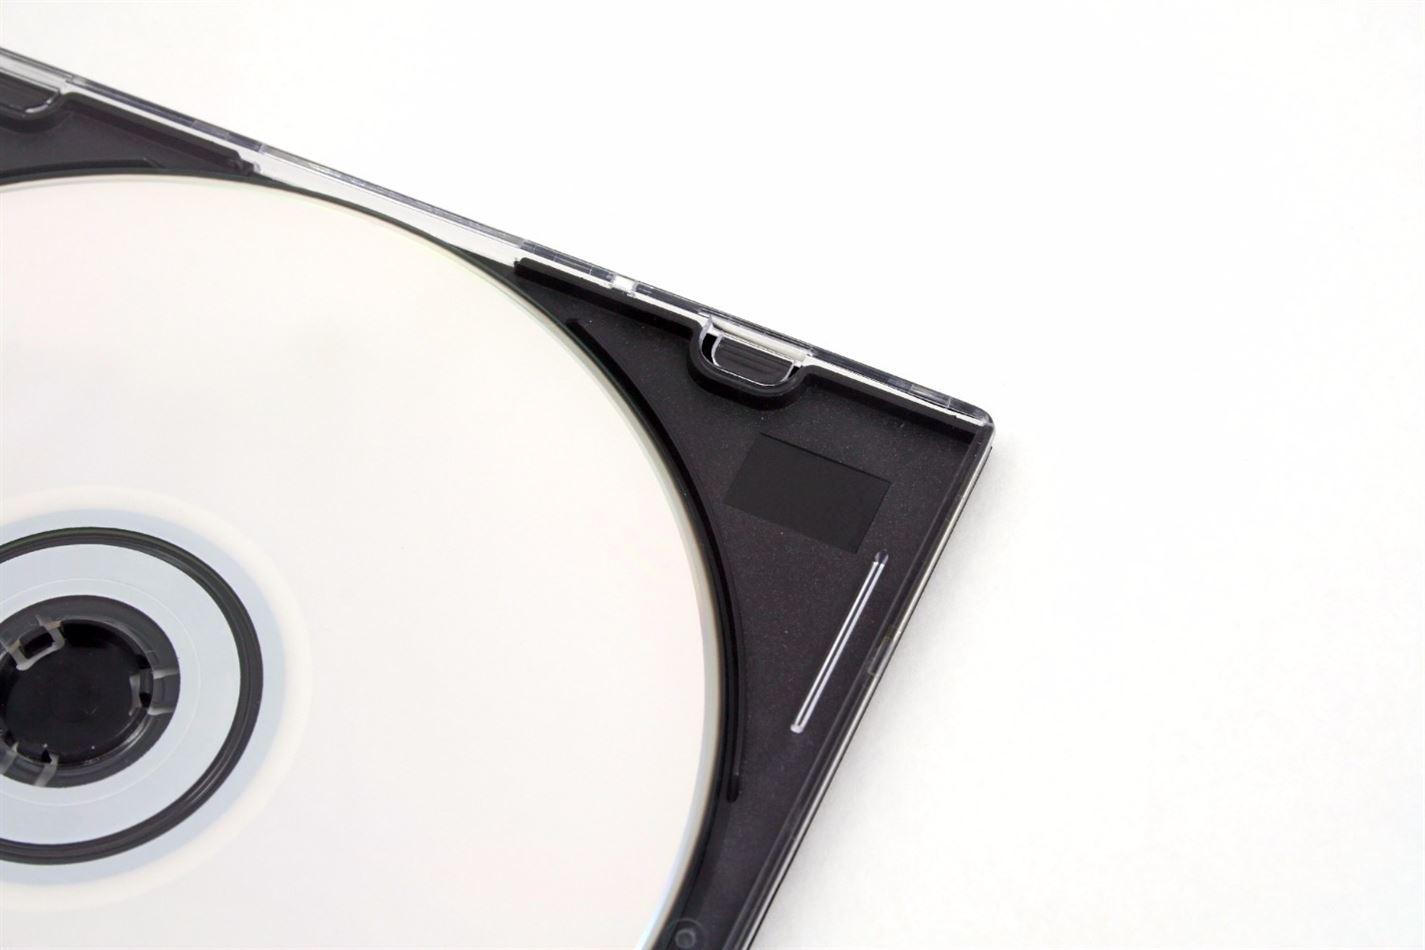 Toshiba HD-DVD HD-A1 Firmware Version 4.0 - Physical CD - NEW - UK SELLER